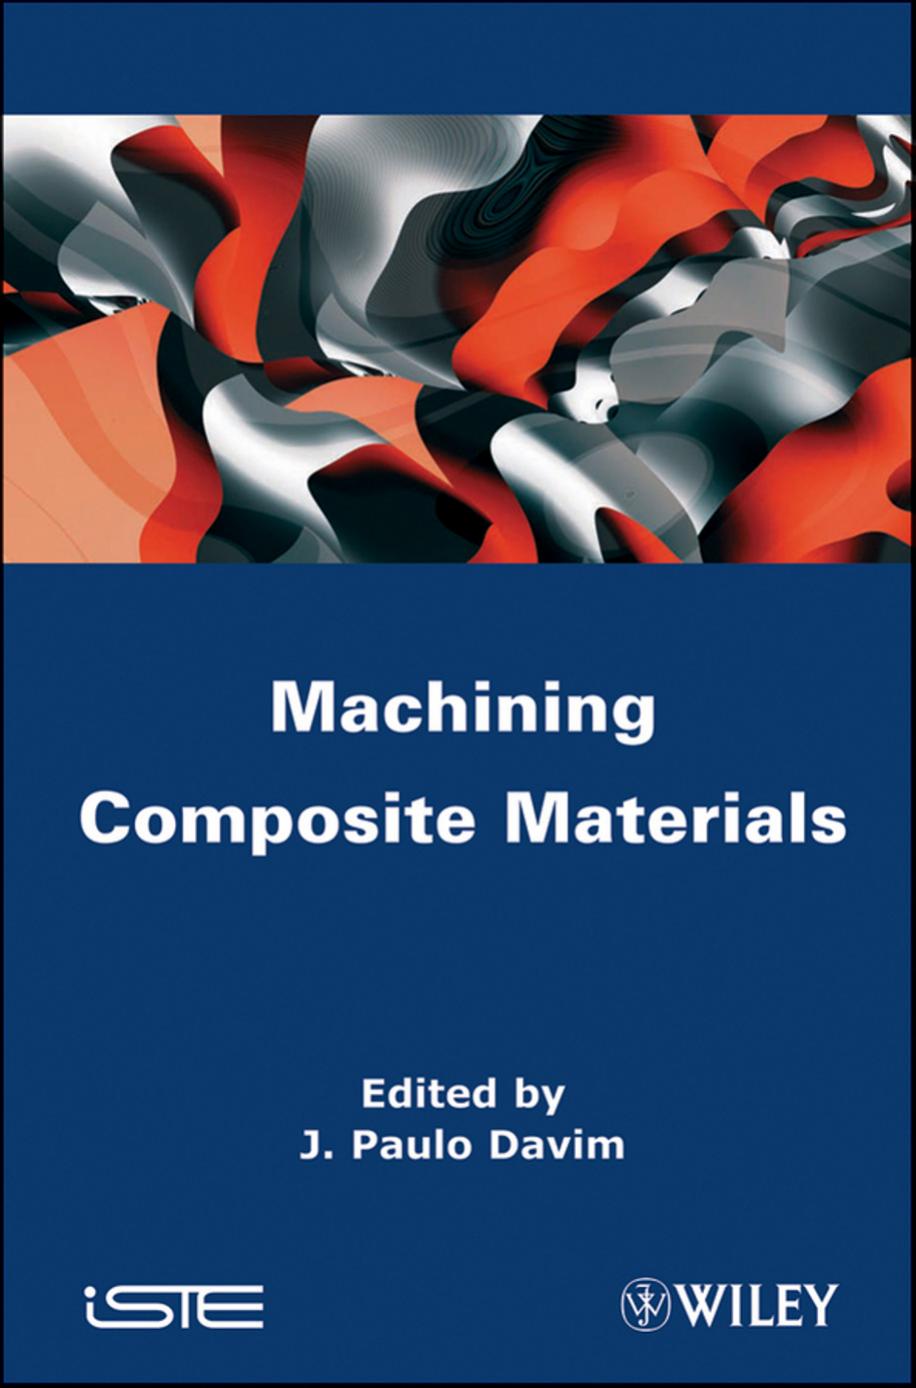 Machining Composites Materials by J. Paulo Davim